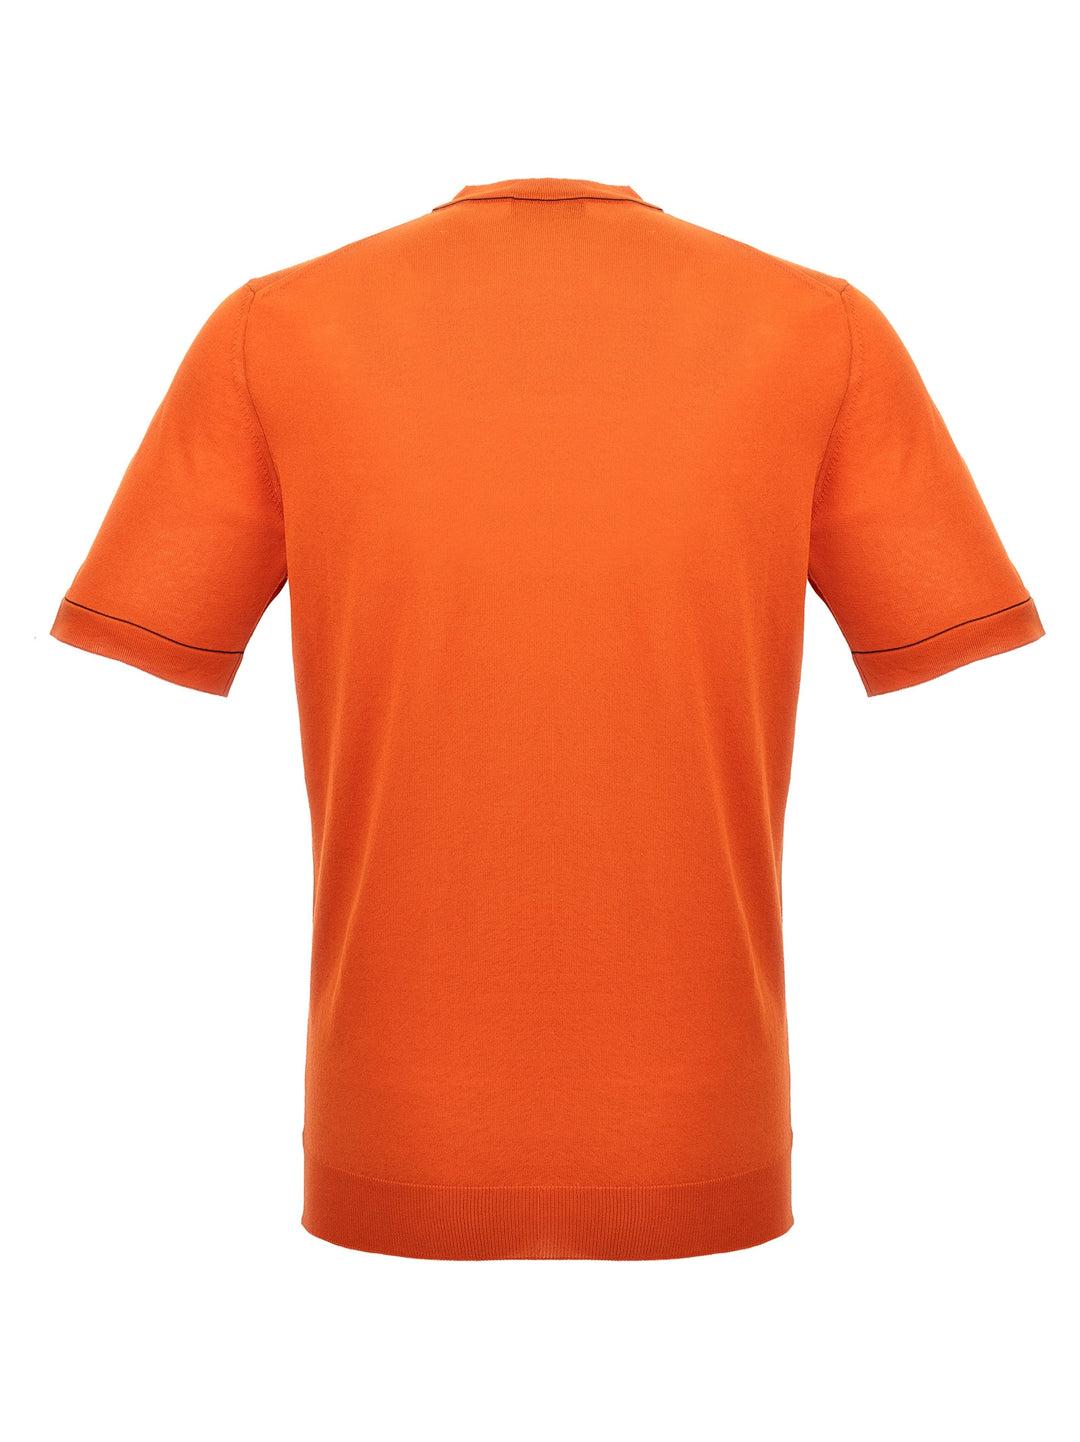 Jairo T Shirt Arancione